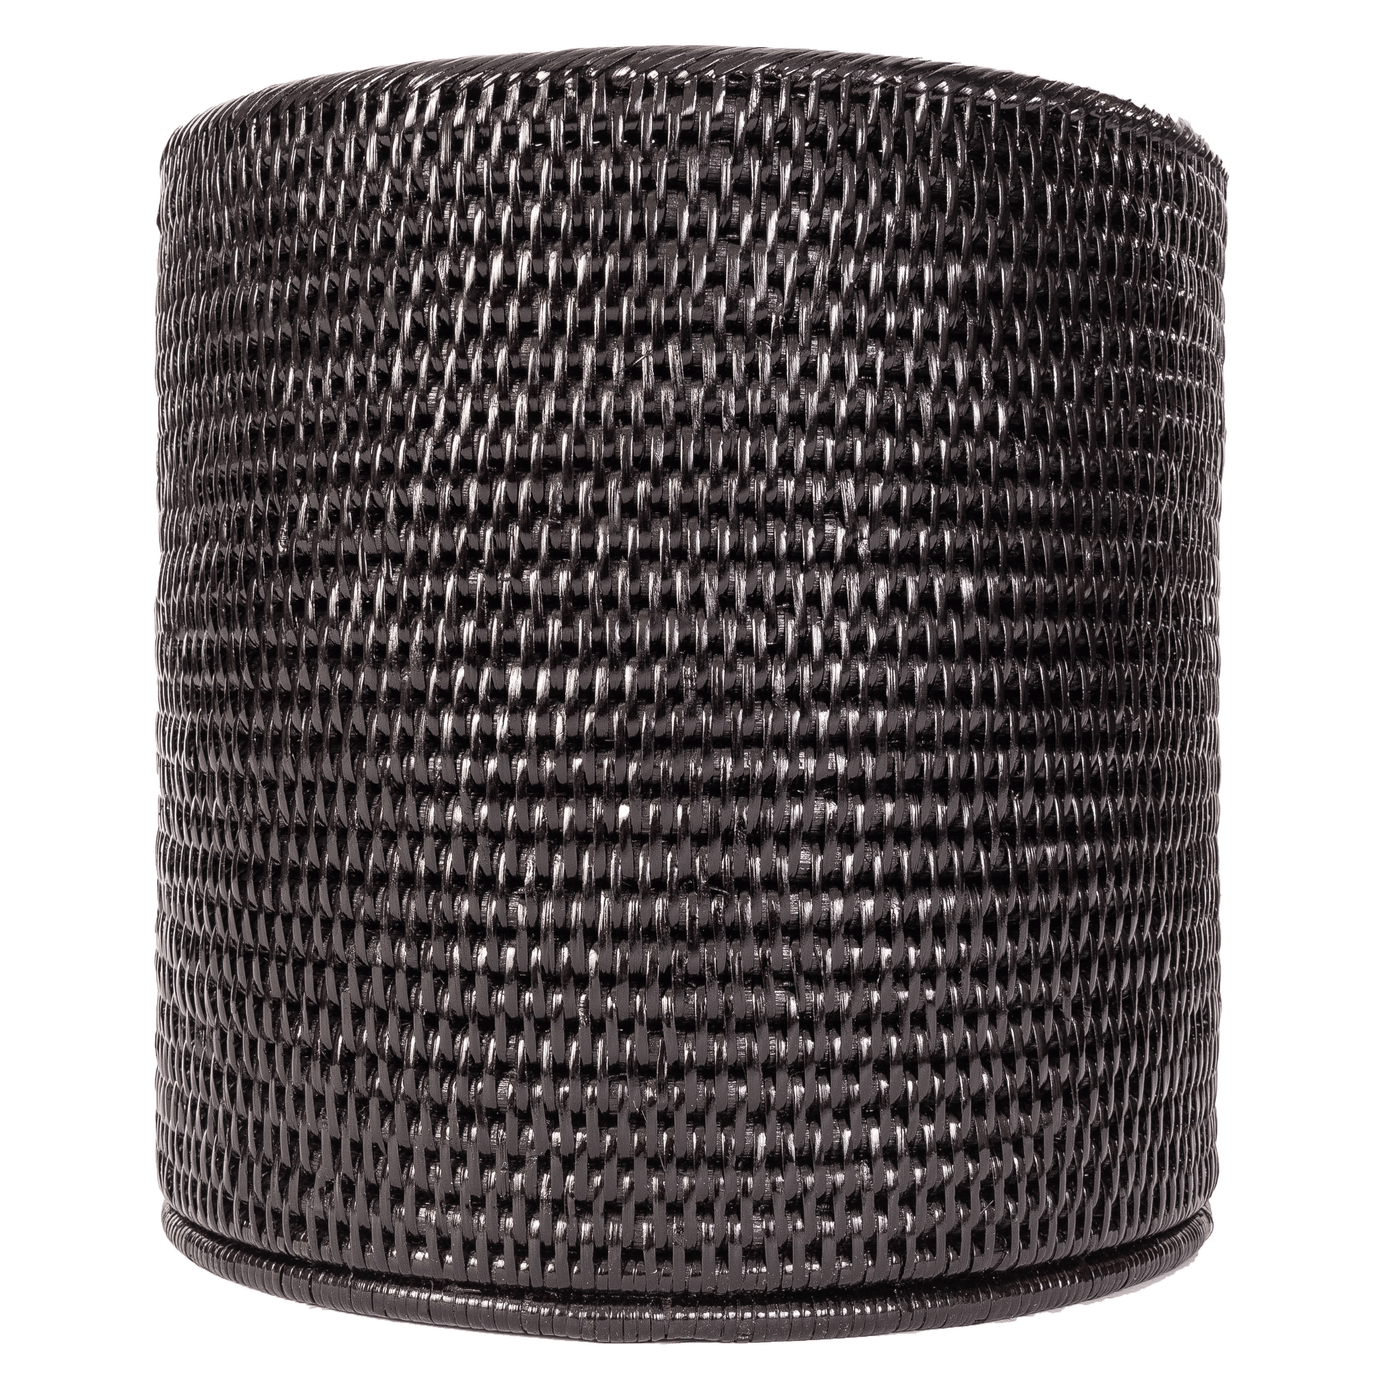 Rattan Round Waste Basket with Metal Liner